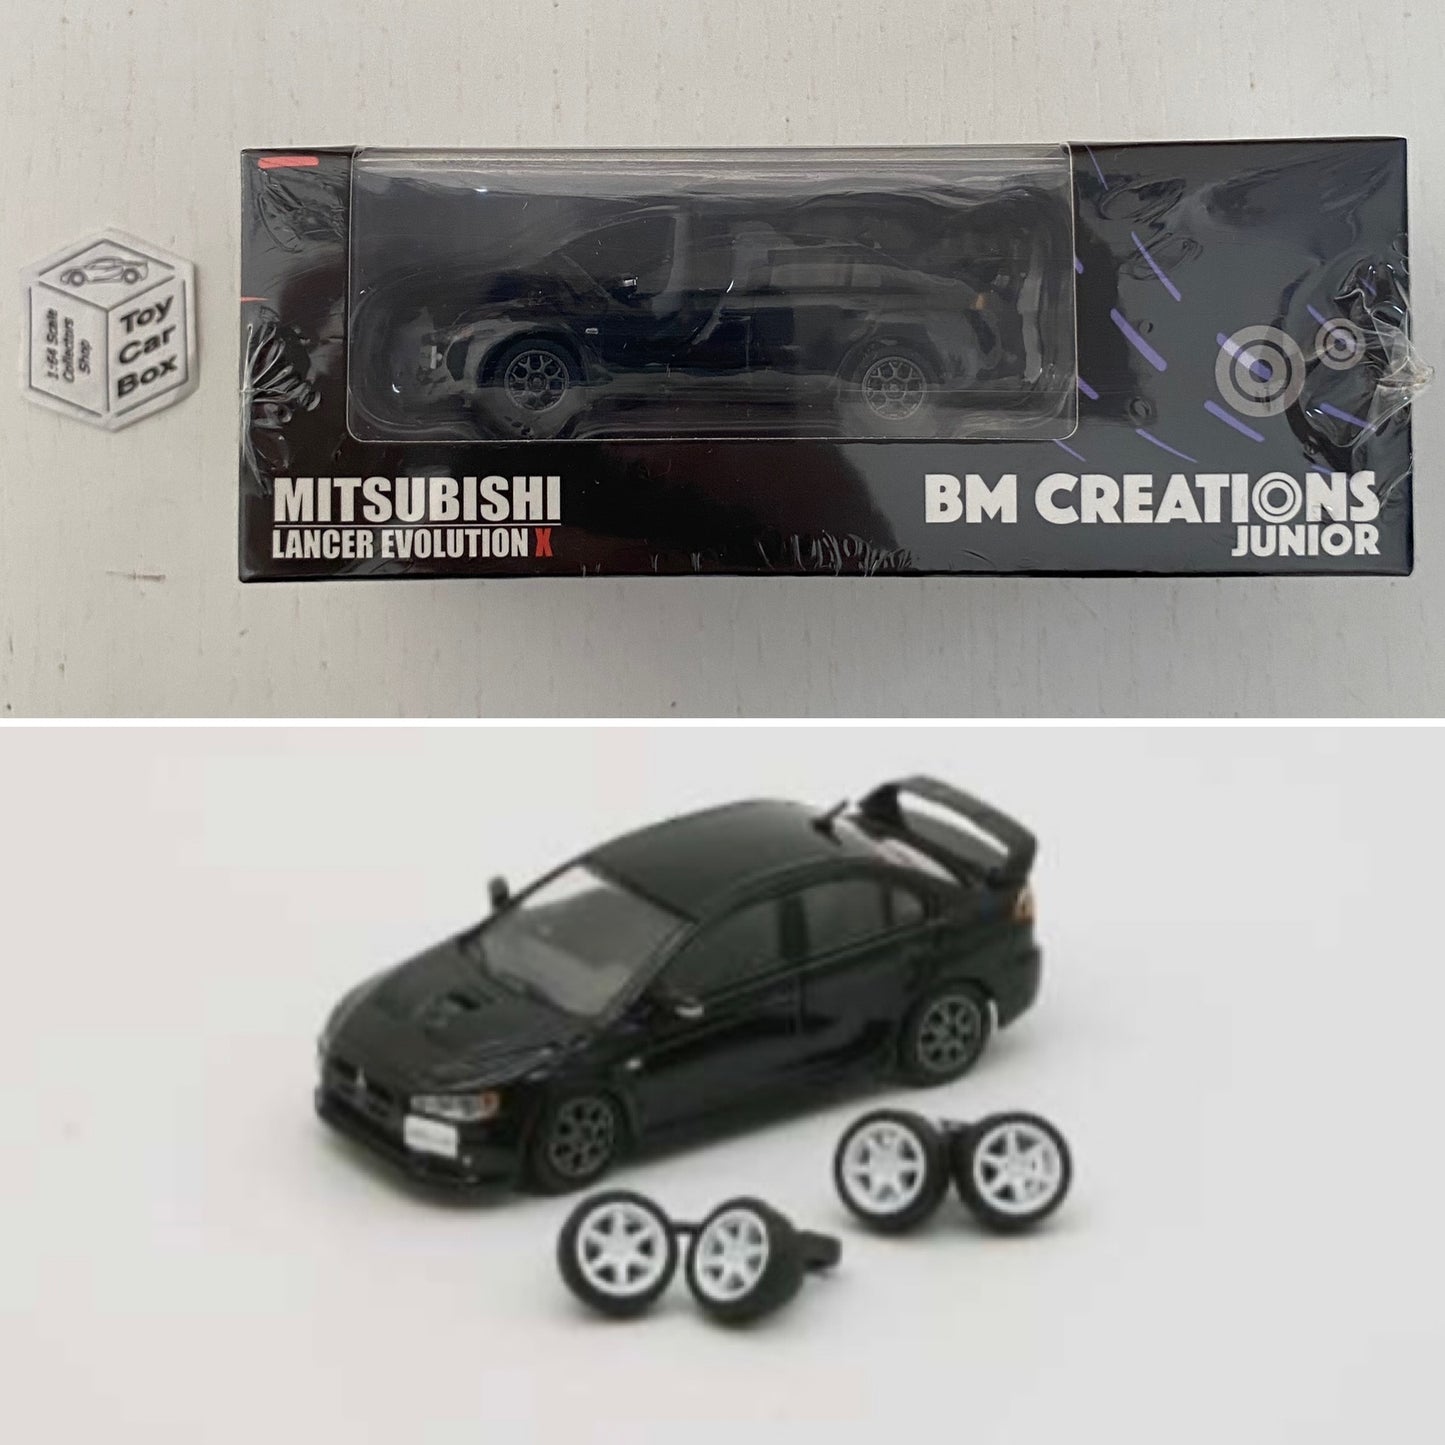 BM CREATIONS - Mitsubishi Lancer Evolution X (1:64 Scale - Black - RHD) L17g